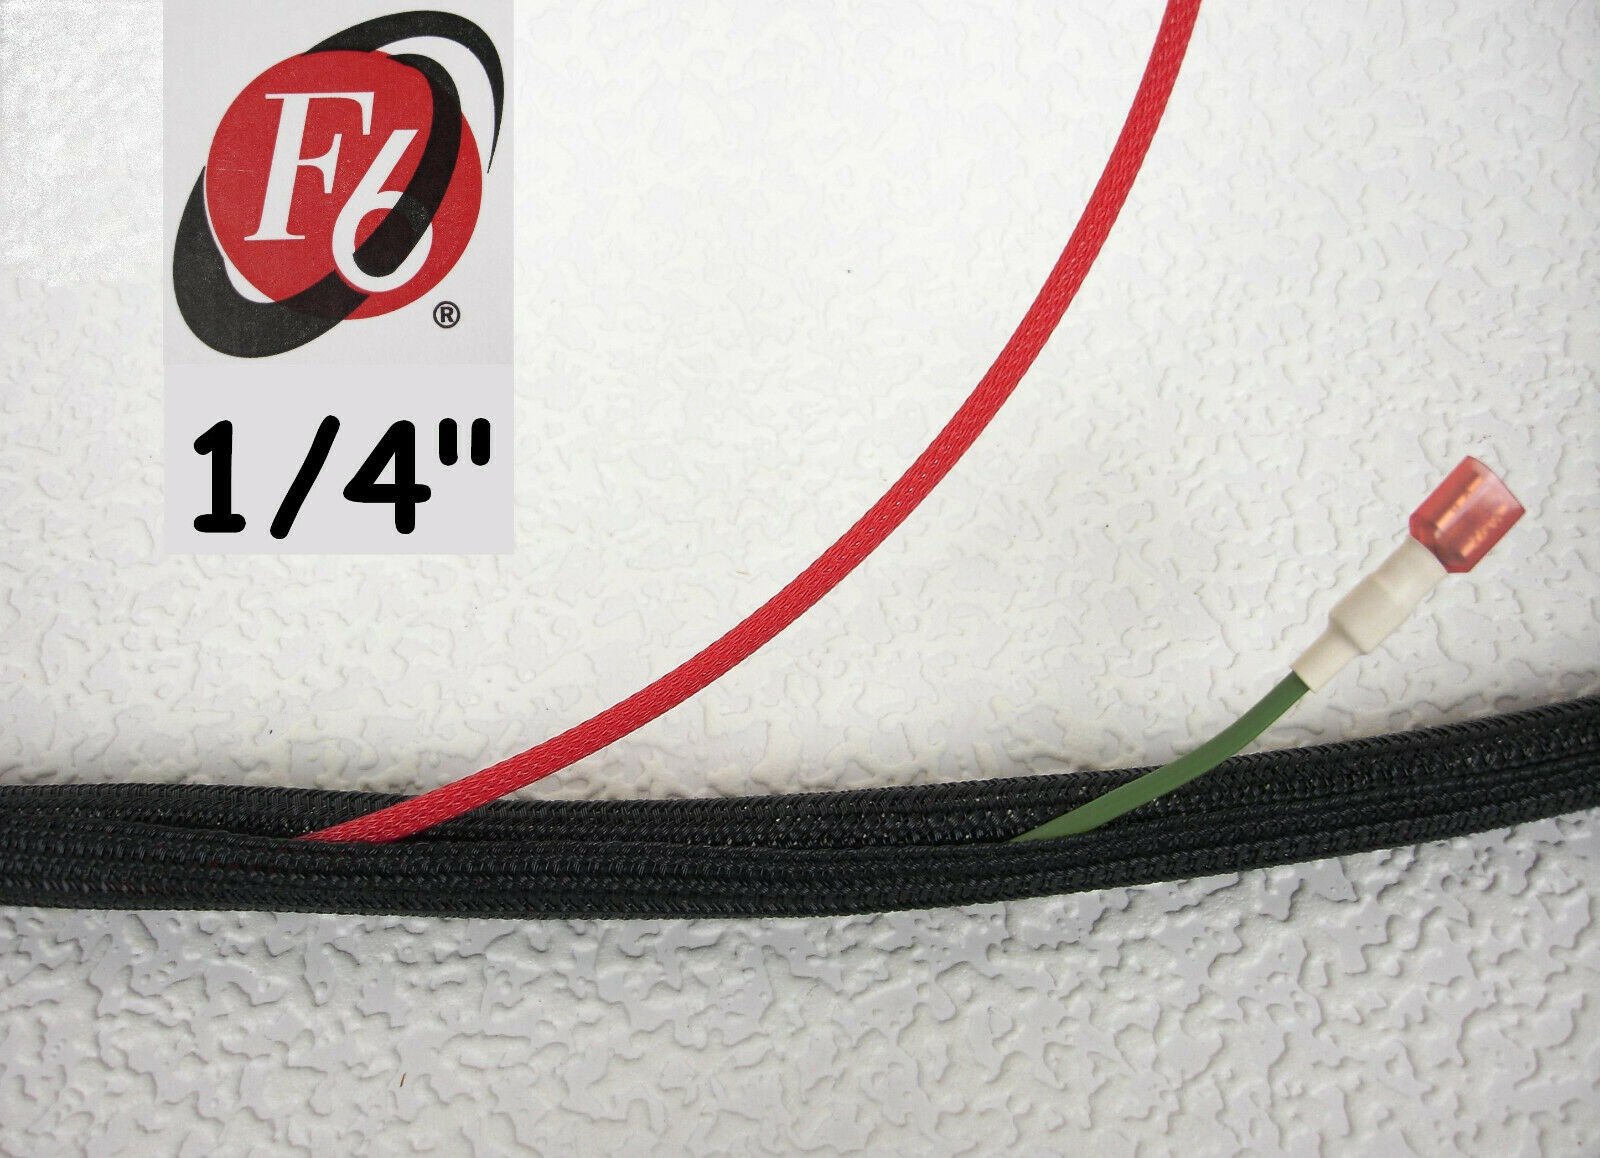 1/4" Flexo F6 Braided Cable Sleeving Wrap, Split Loom, Techflex F6n0.25bk